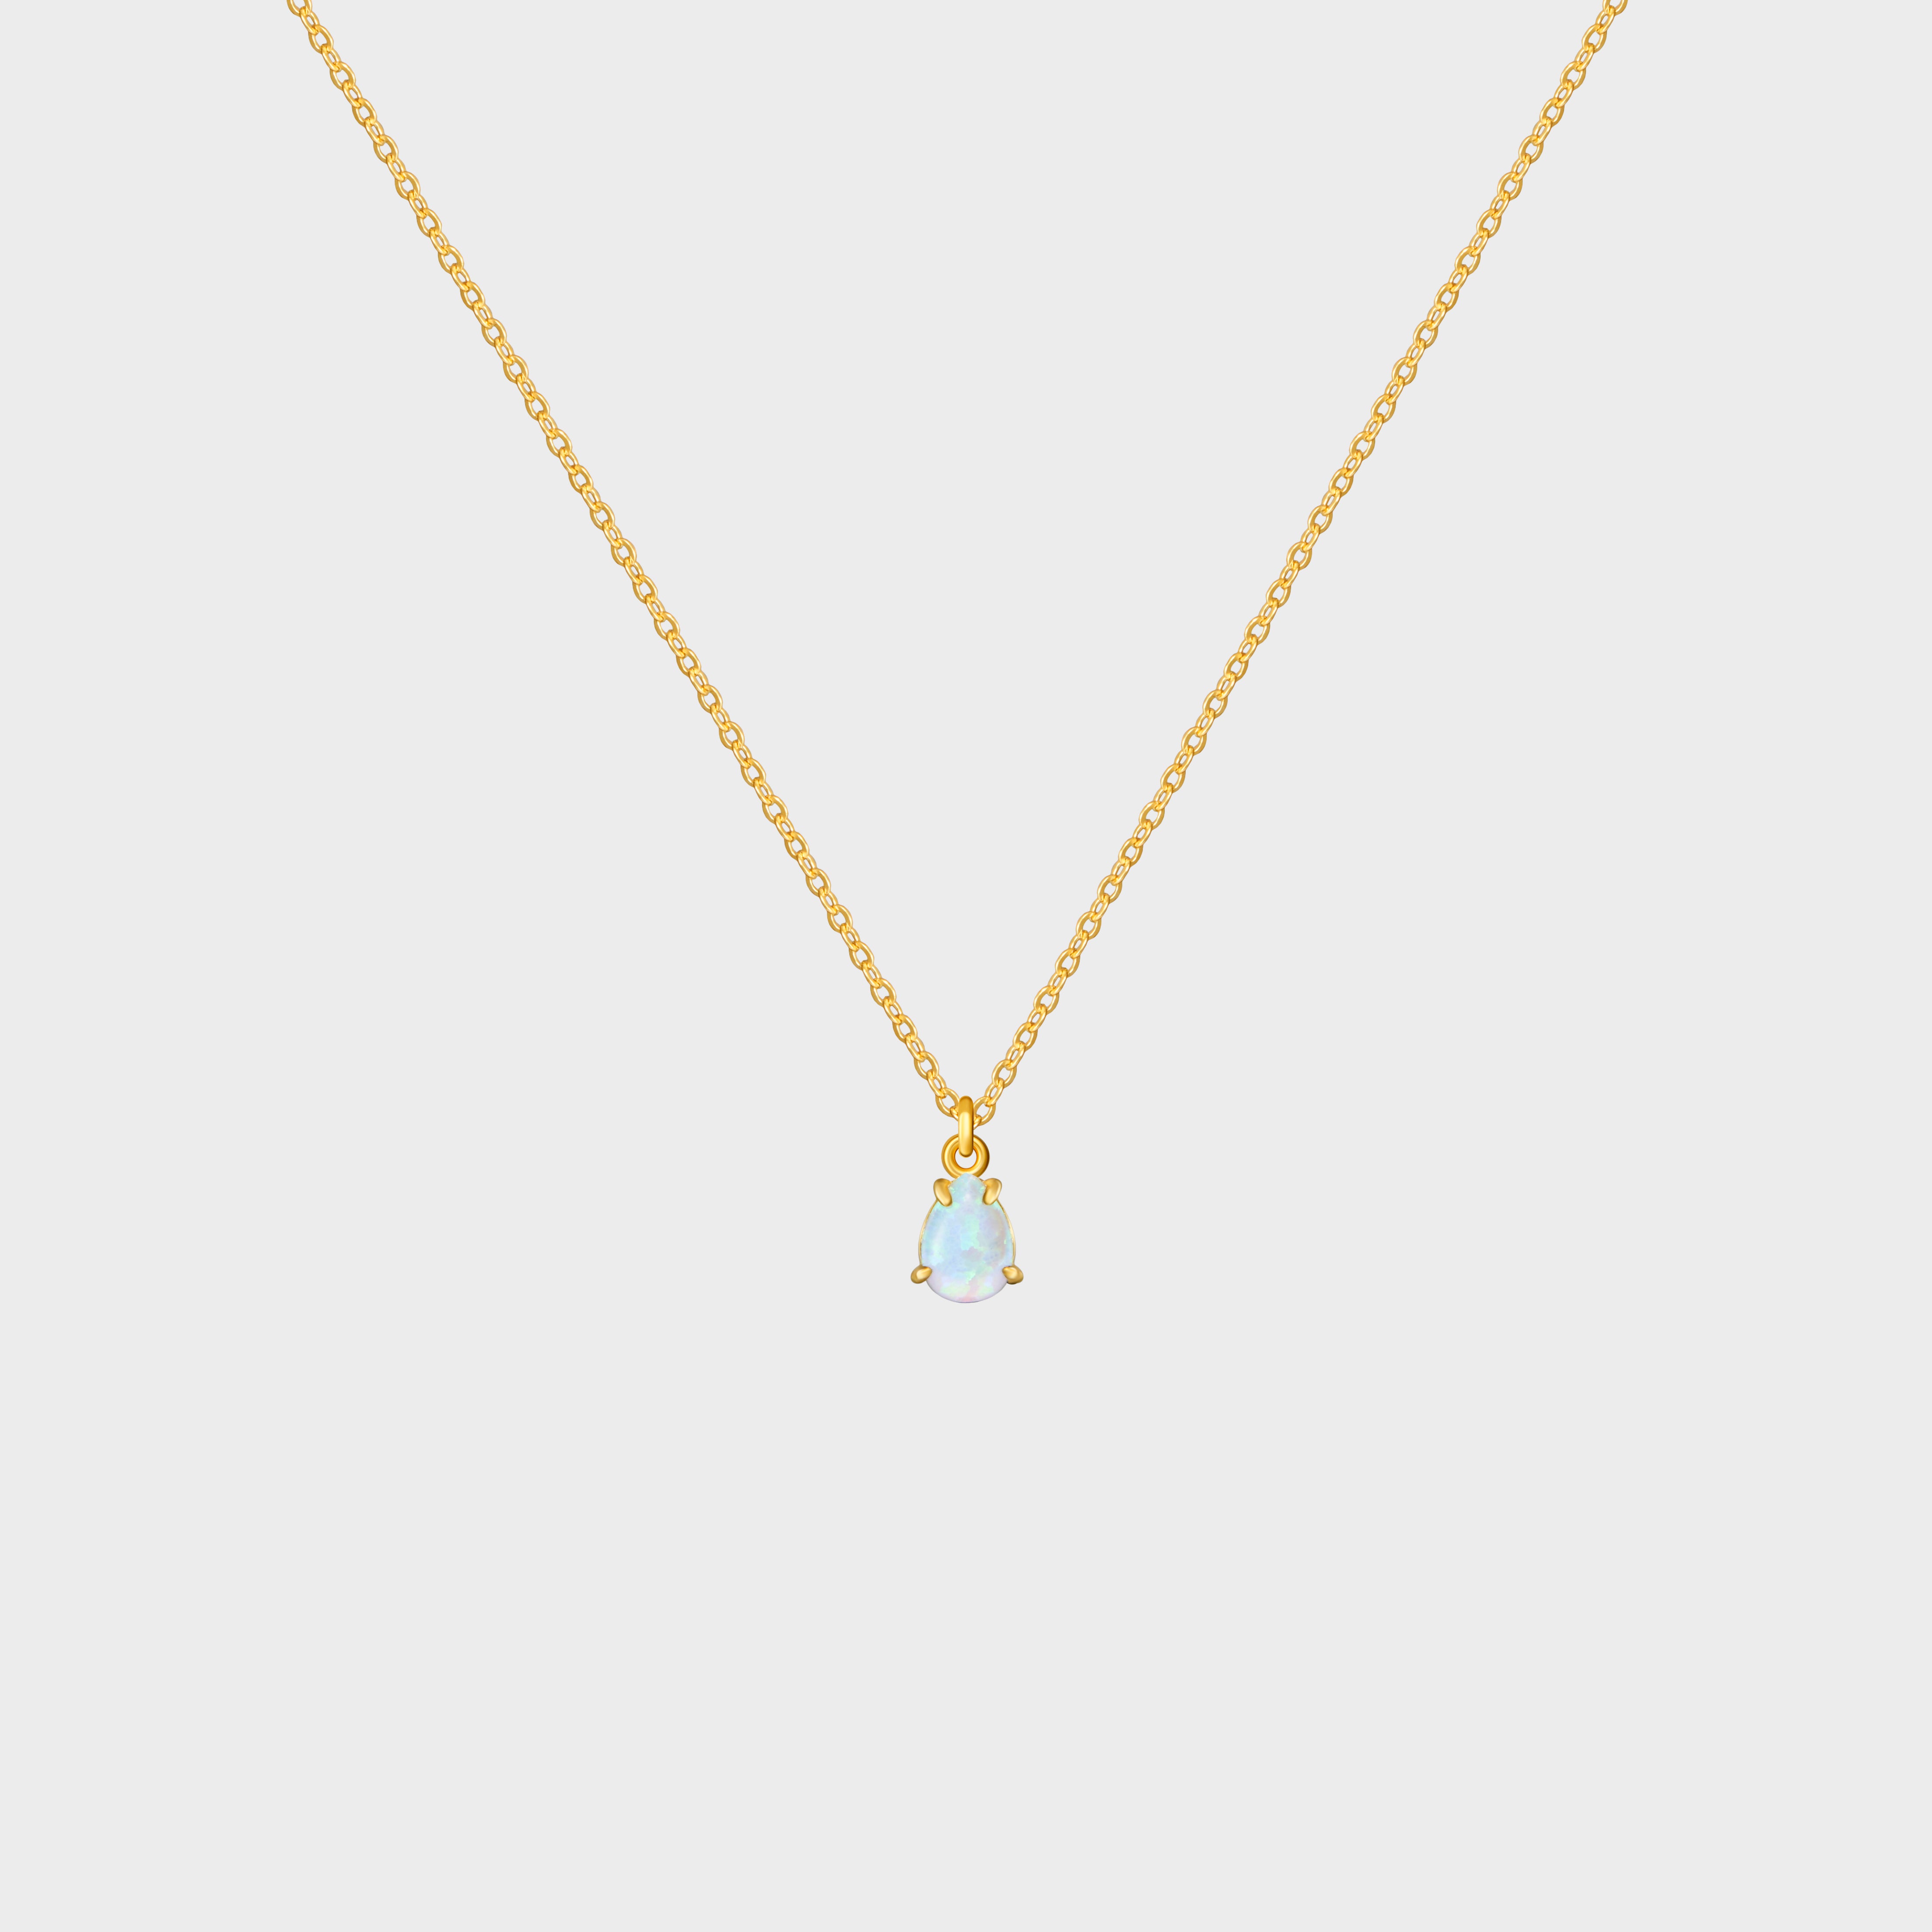 Tiny Prong Teardrop Opal Necklace